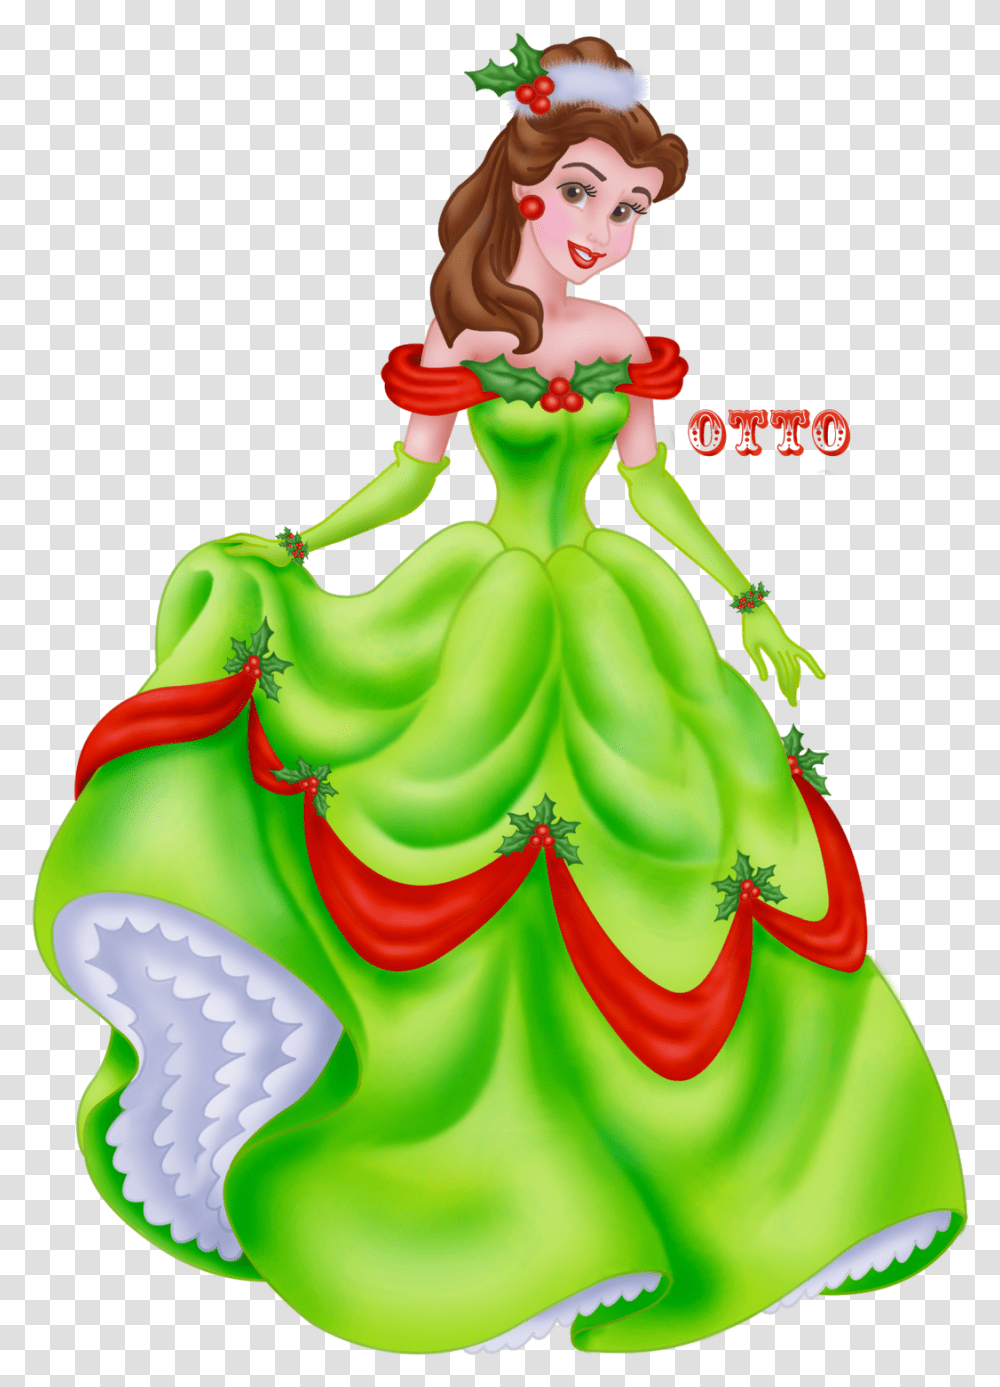 Clipart Princesas Disney Disney Princess Belle Christmas Dress, Doll, Toy, Figurine Transparent Png